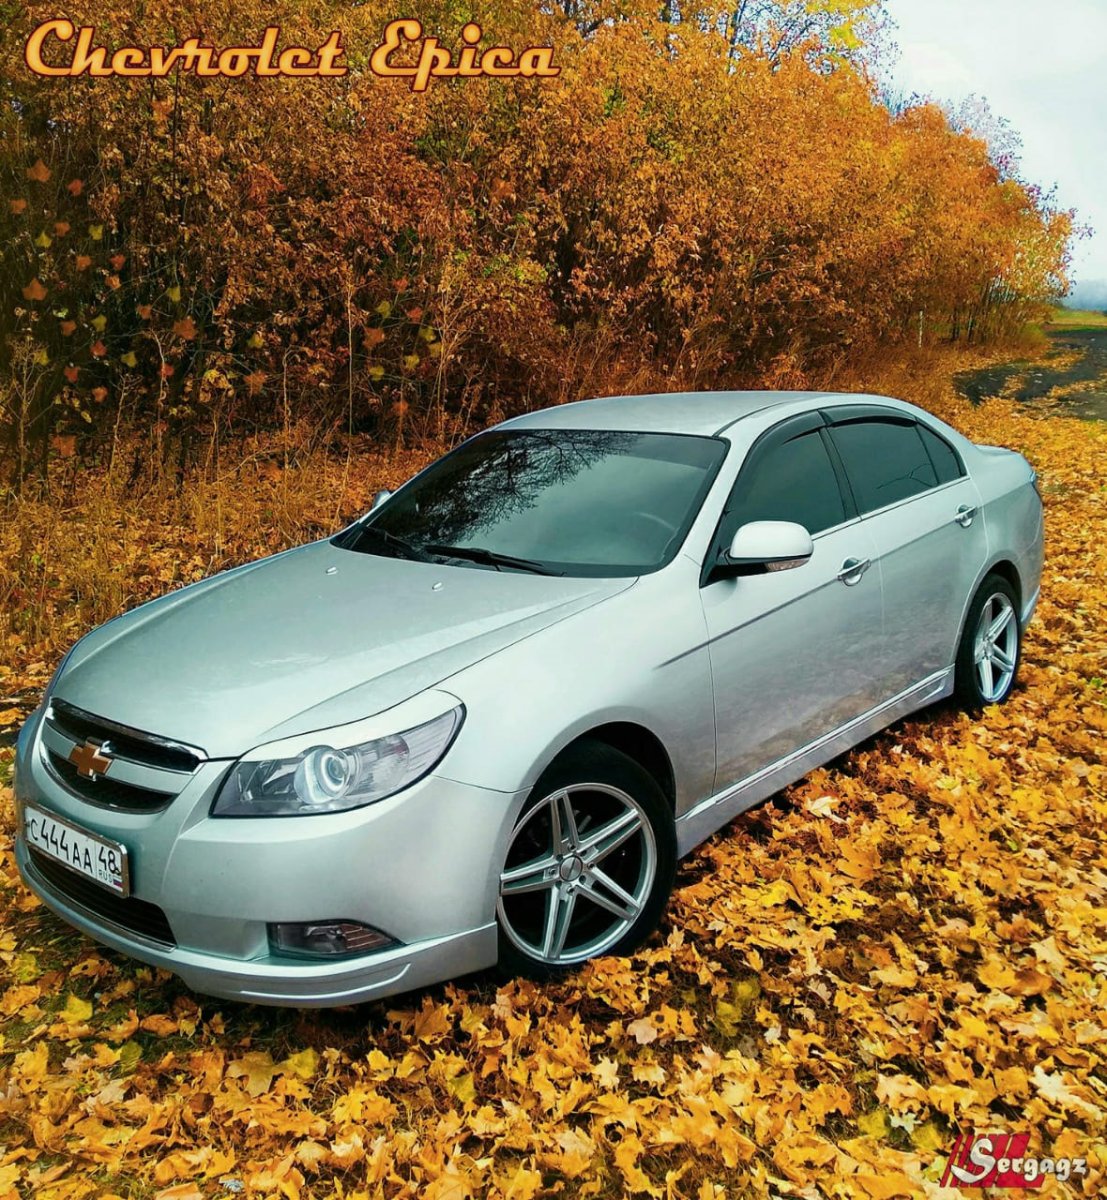 Chevrolet Epica 2011 Tuning